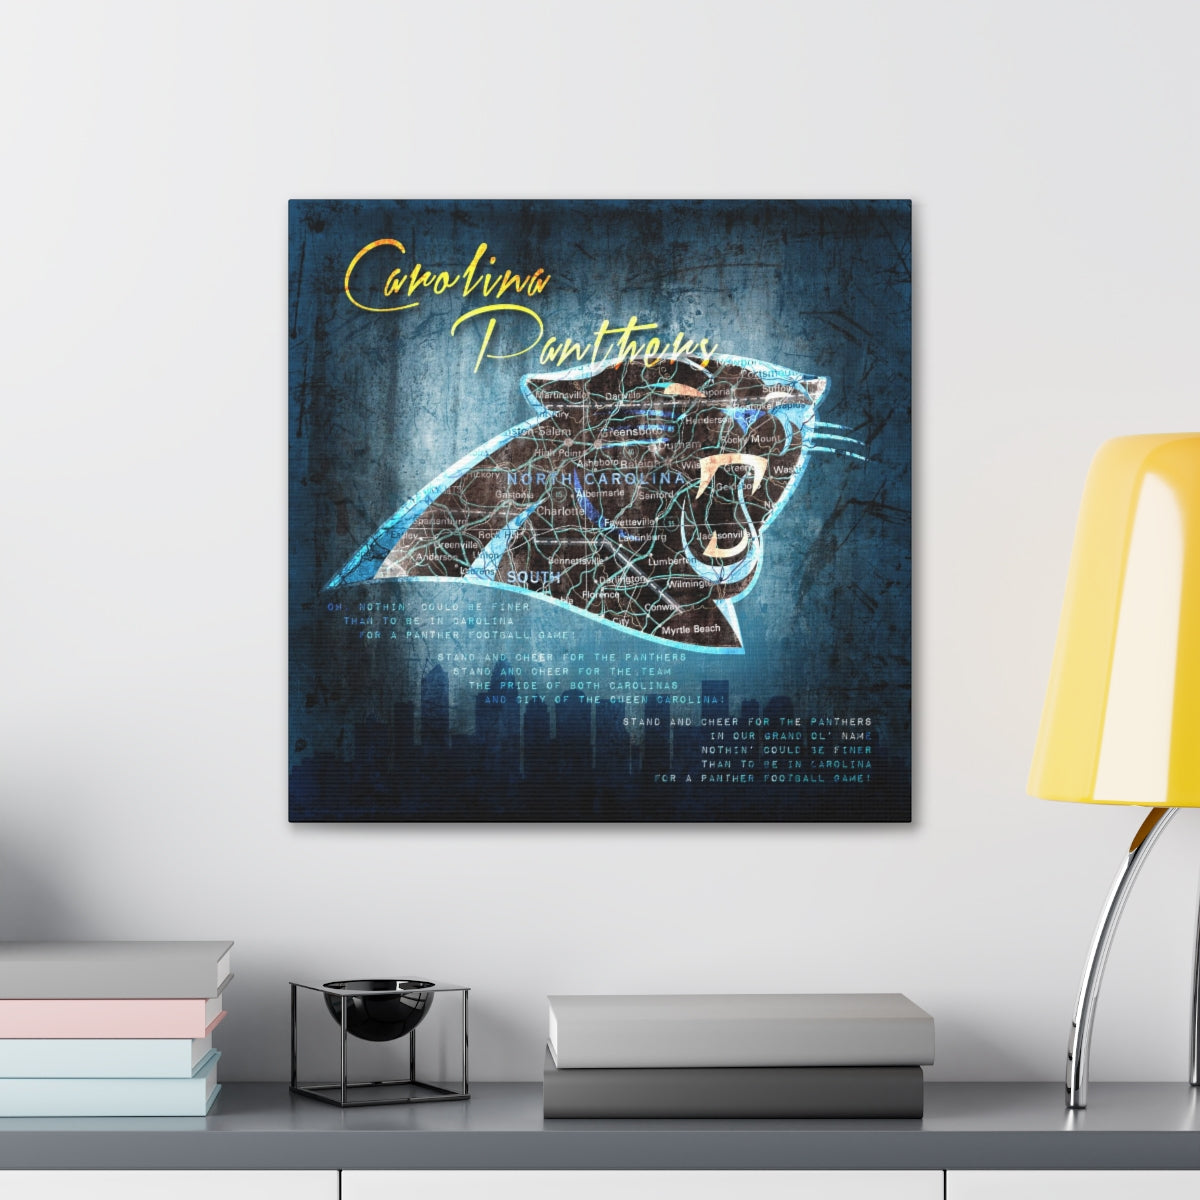 Carolina Panthers Vintage Canvas Map